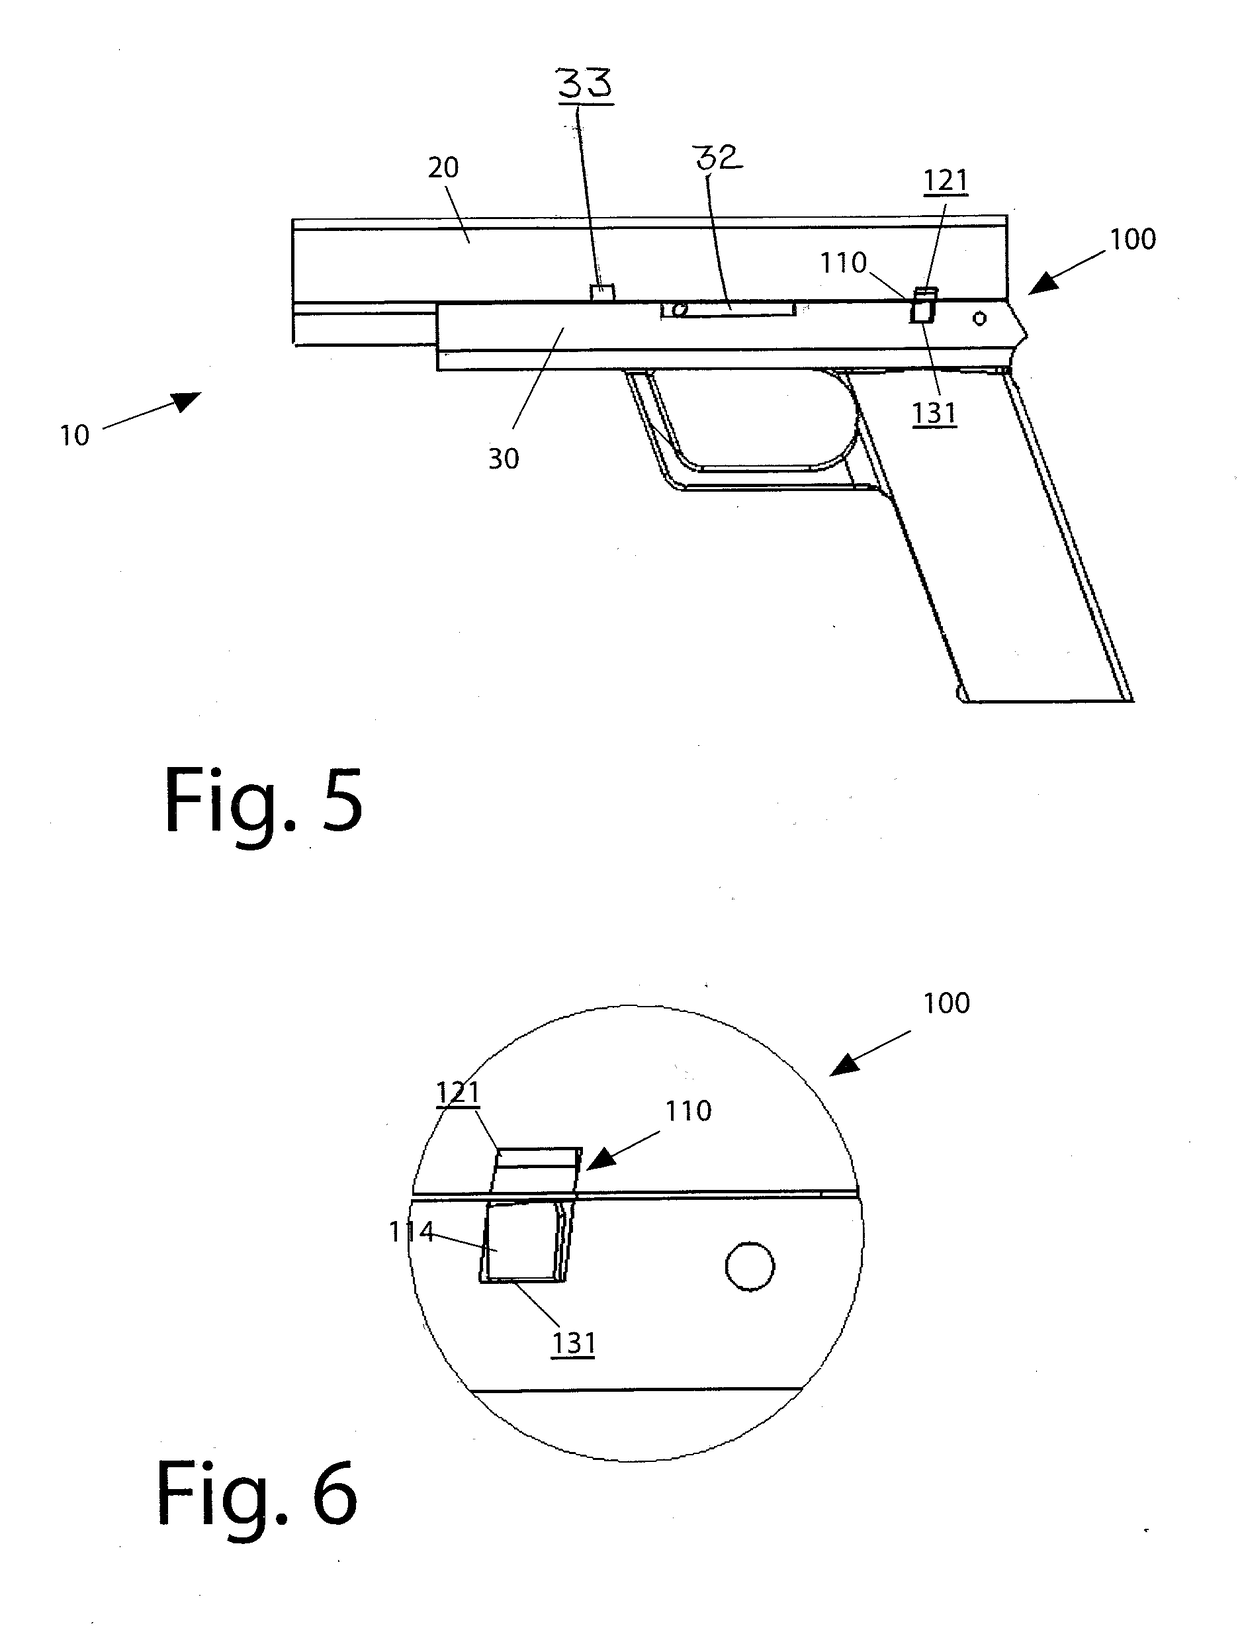 Slide block mechanism for semi-automatic pistols